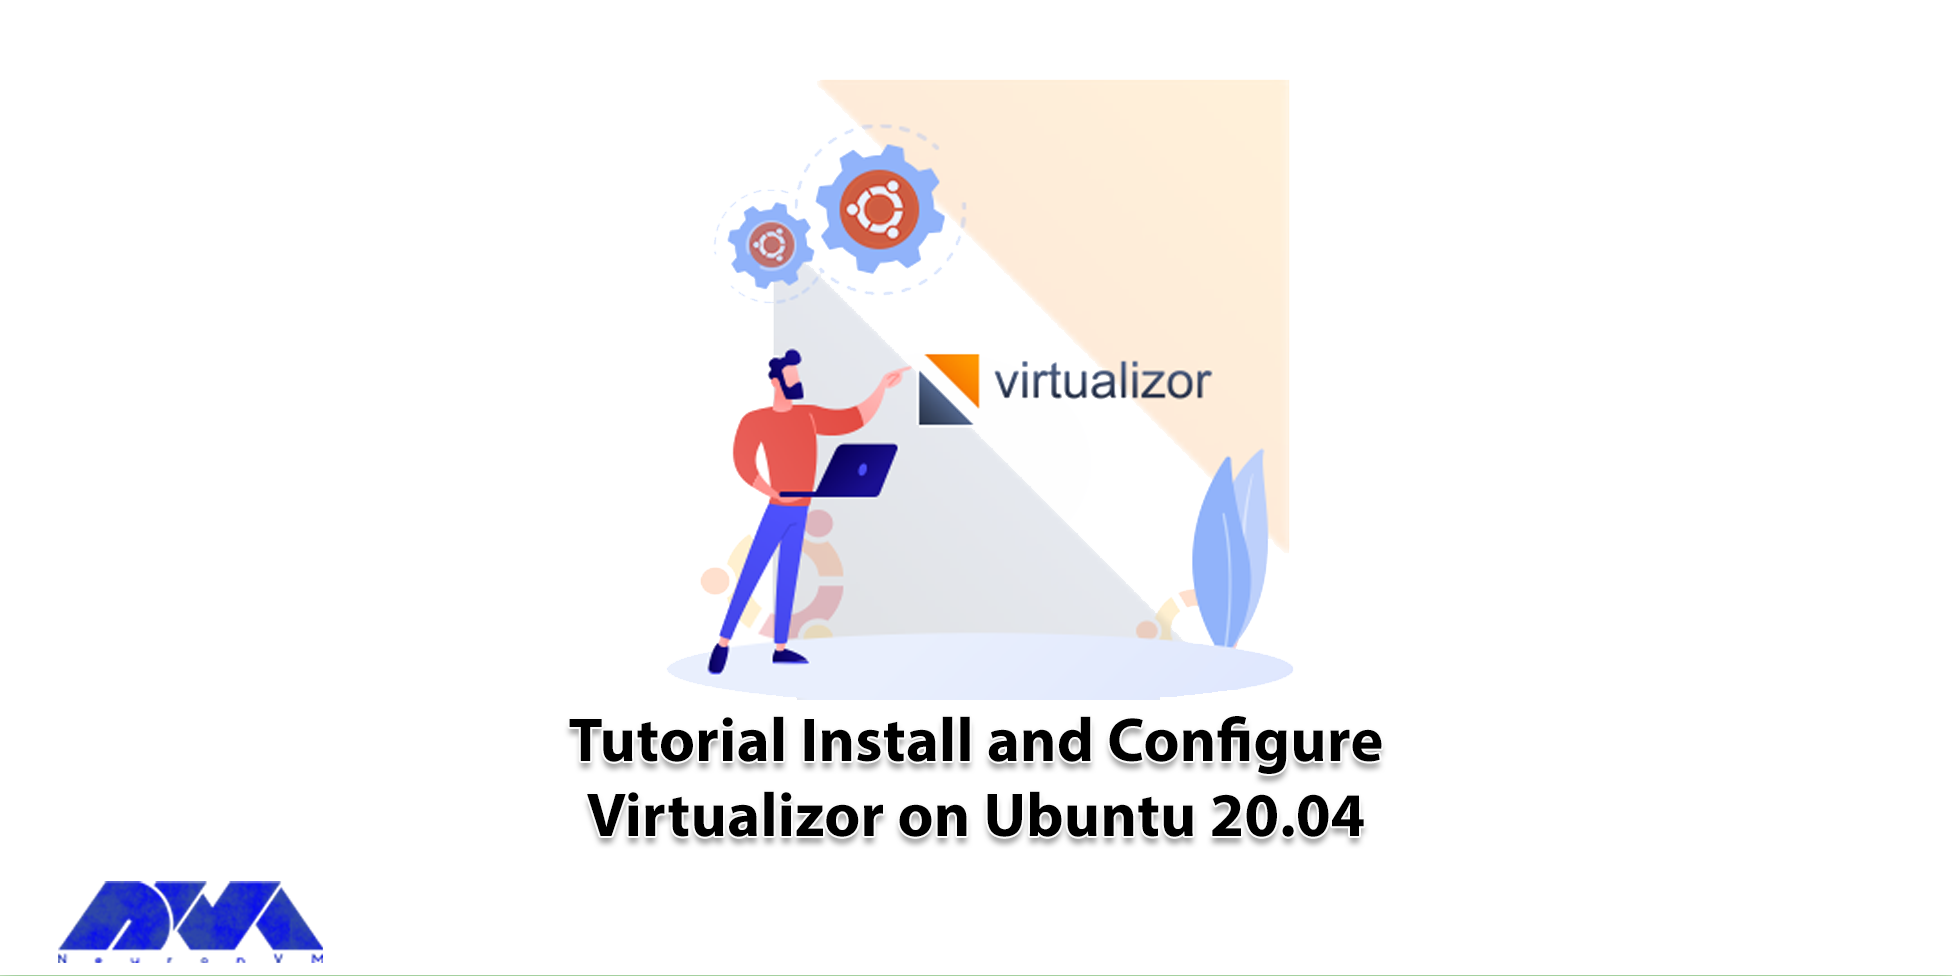 Tutorial Install and Configure Virtualizor on Ubuntu 20.04